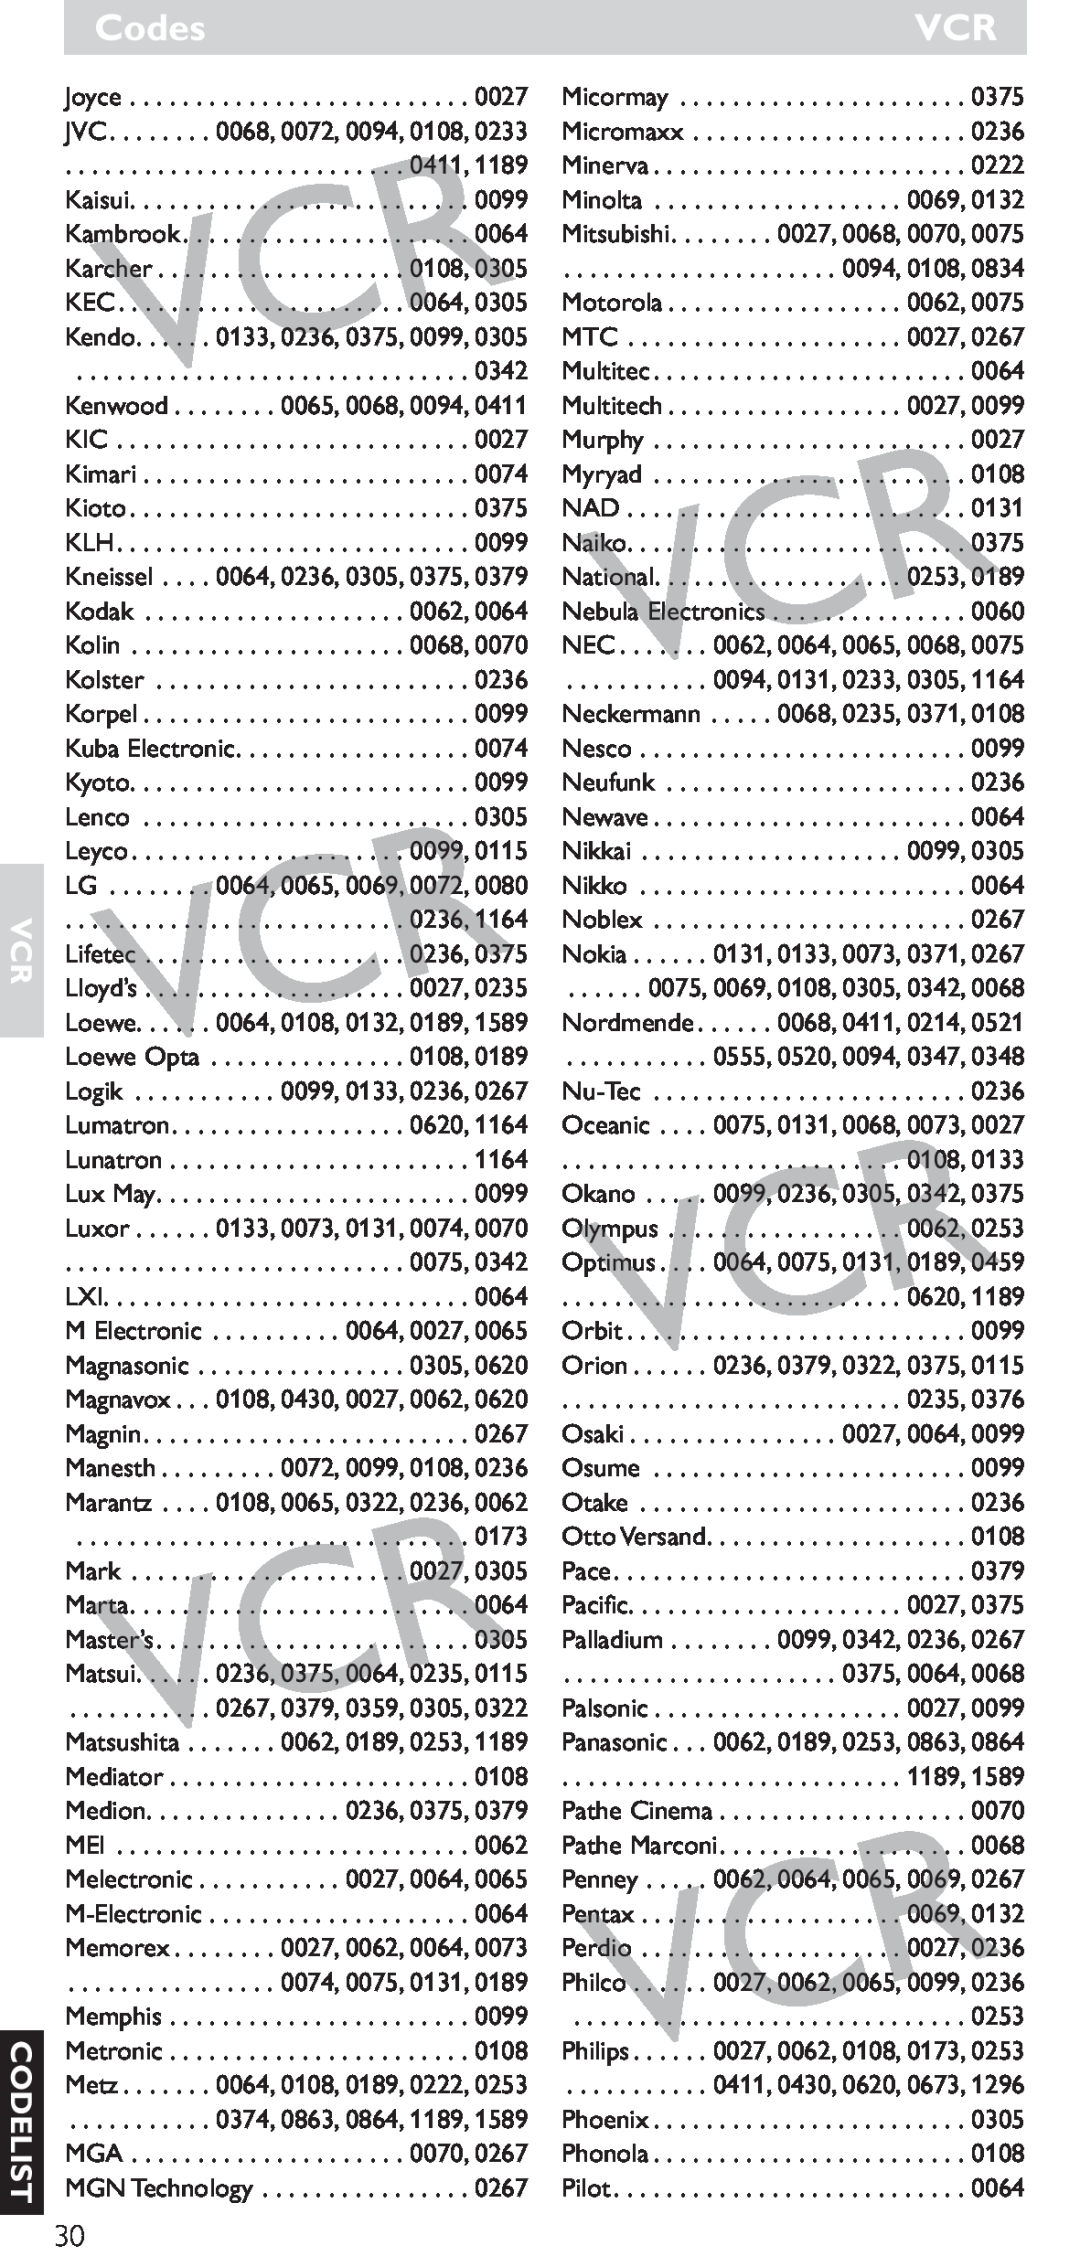 Hitachi SRU 5040/05 manual Codes, Vcr Codelist 